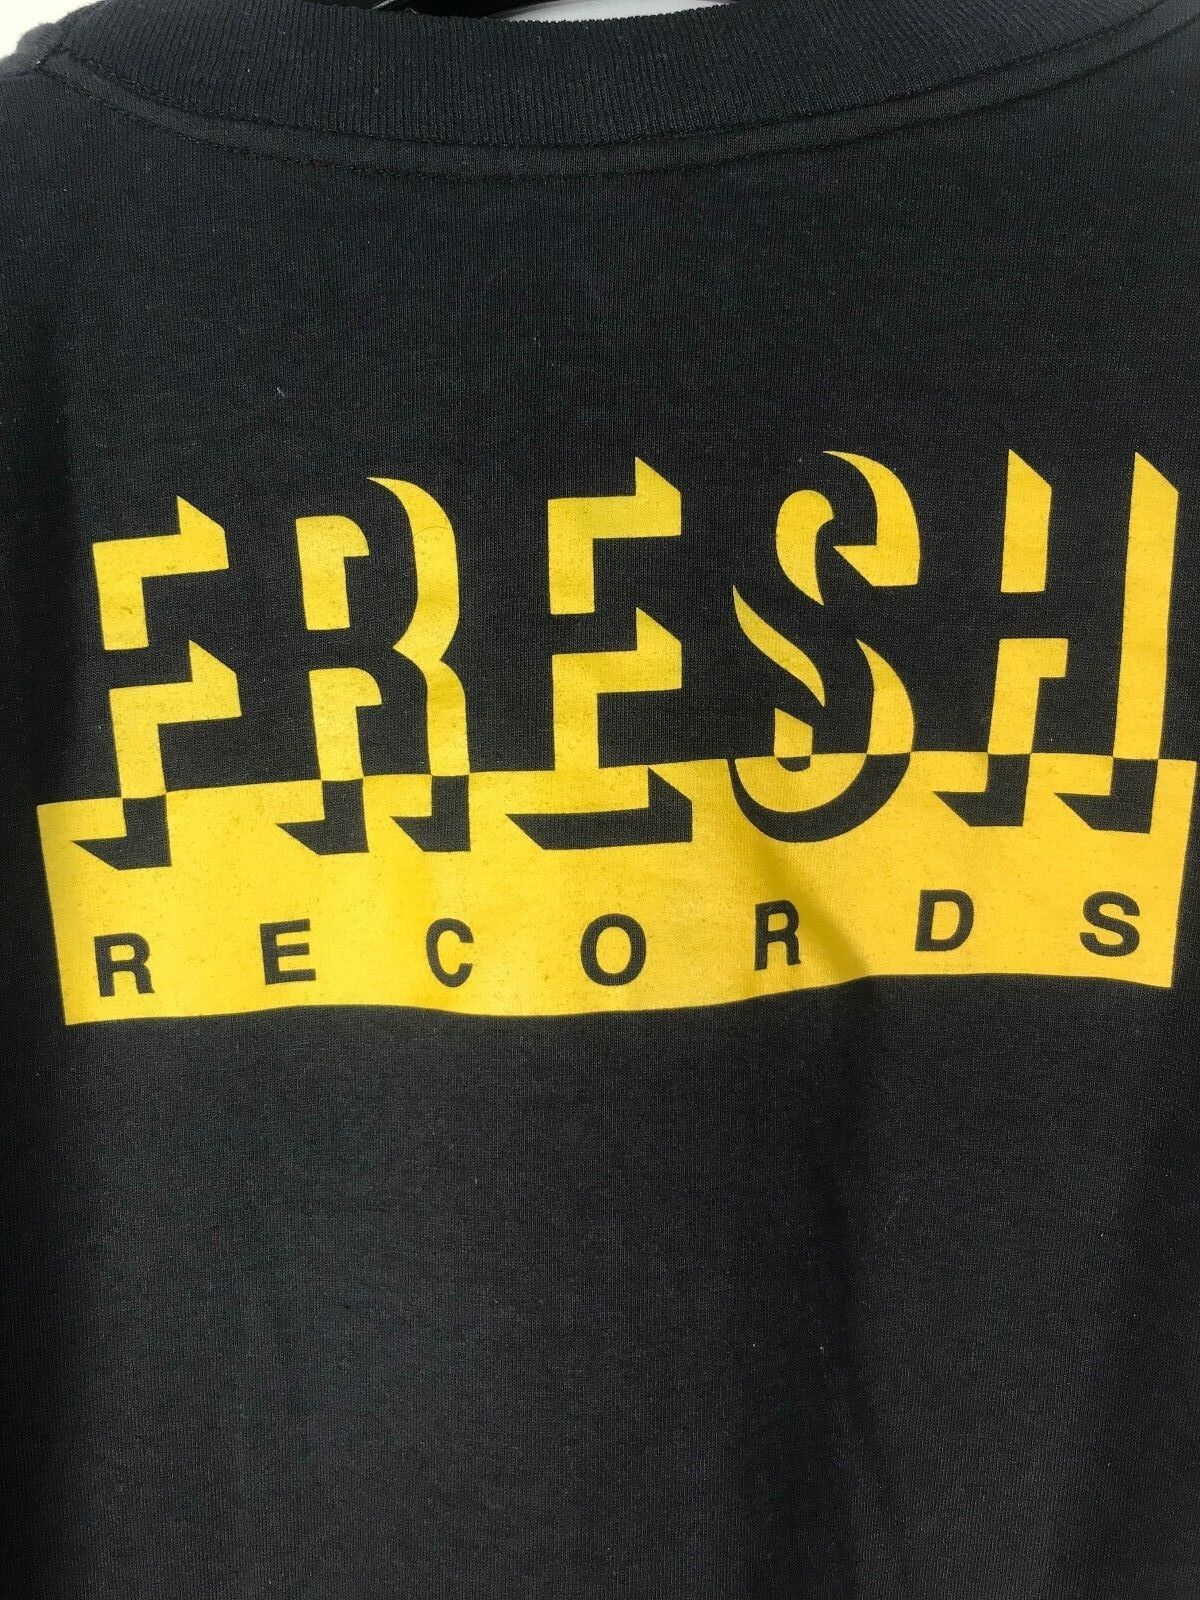 Vintage 80s EPMD Strictly Business Rap T-Shirt